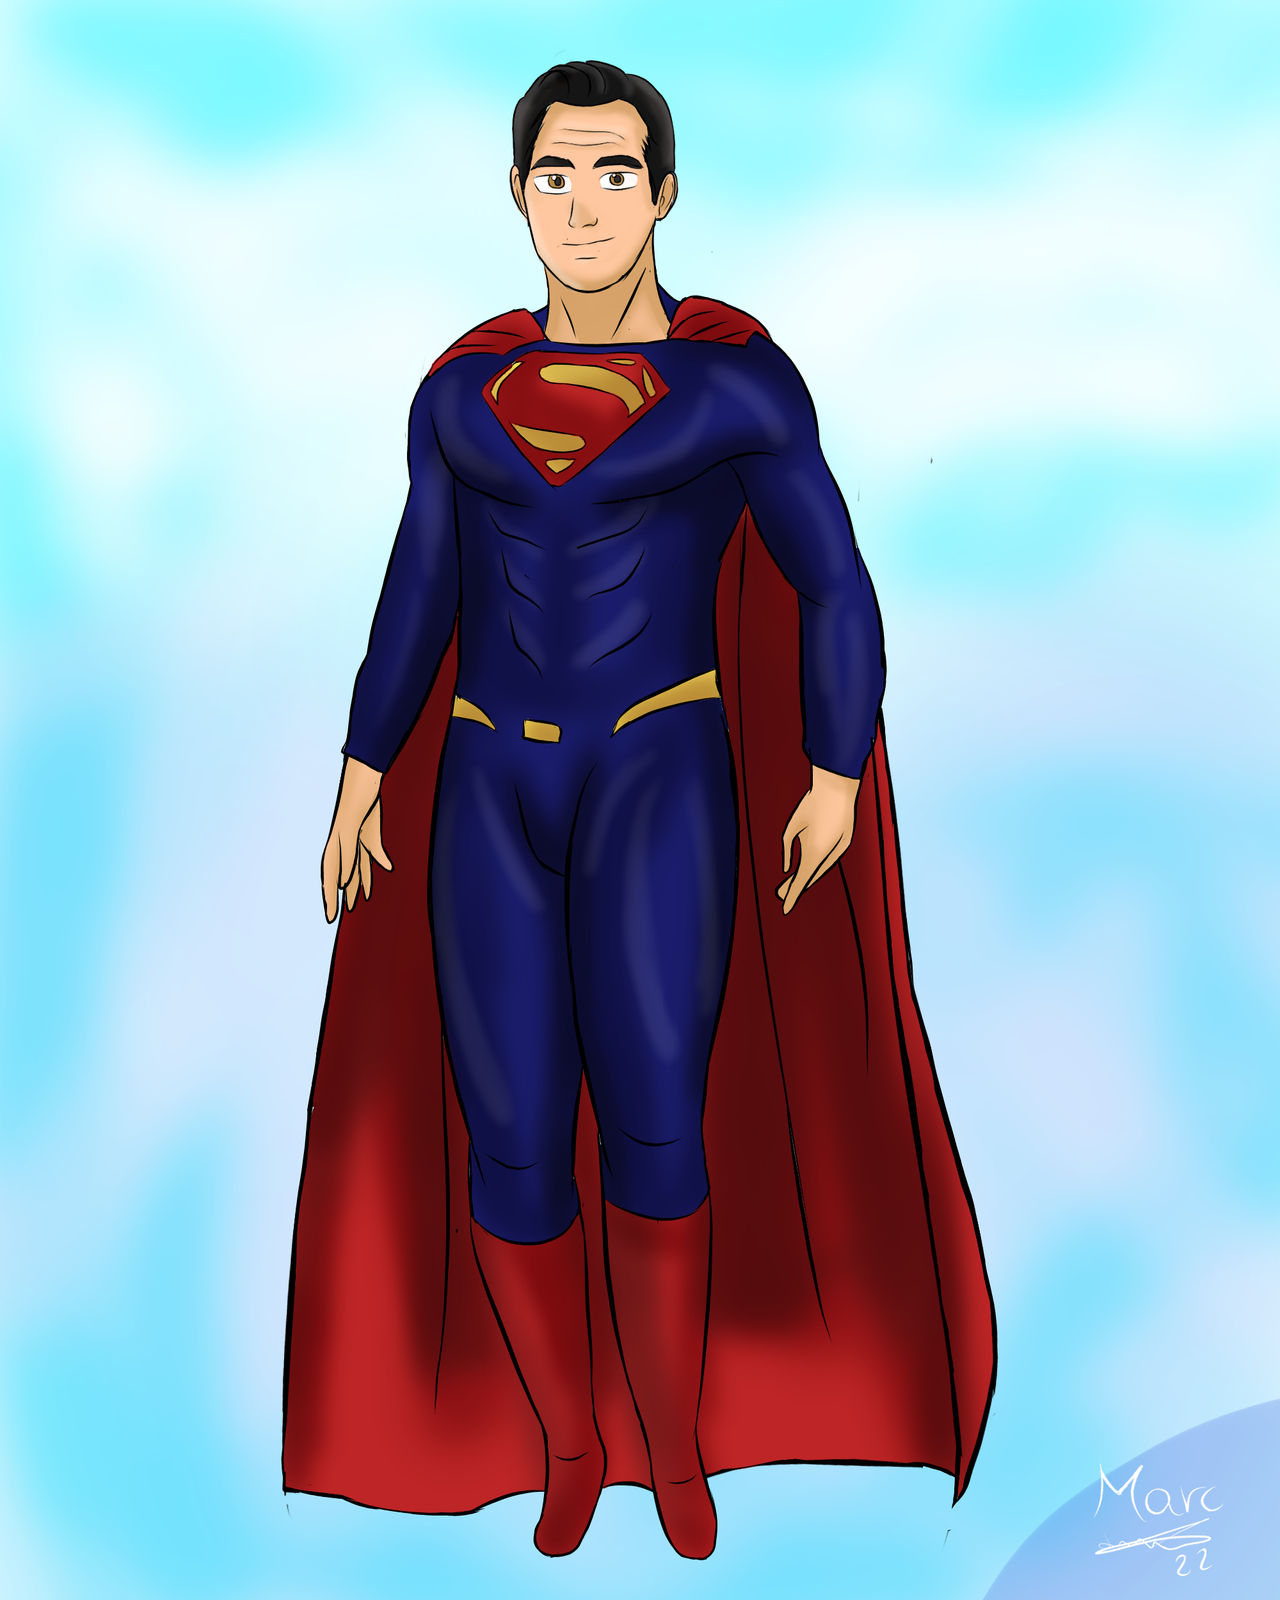 Dibujo De Superman by MarcDibujante on DeviantArt